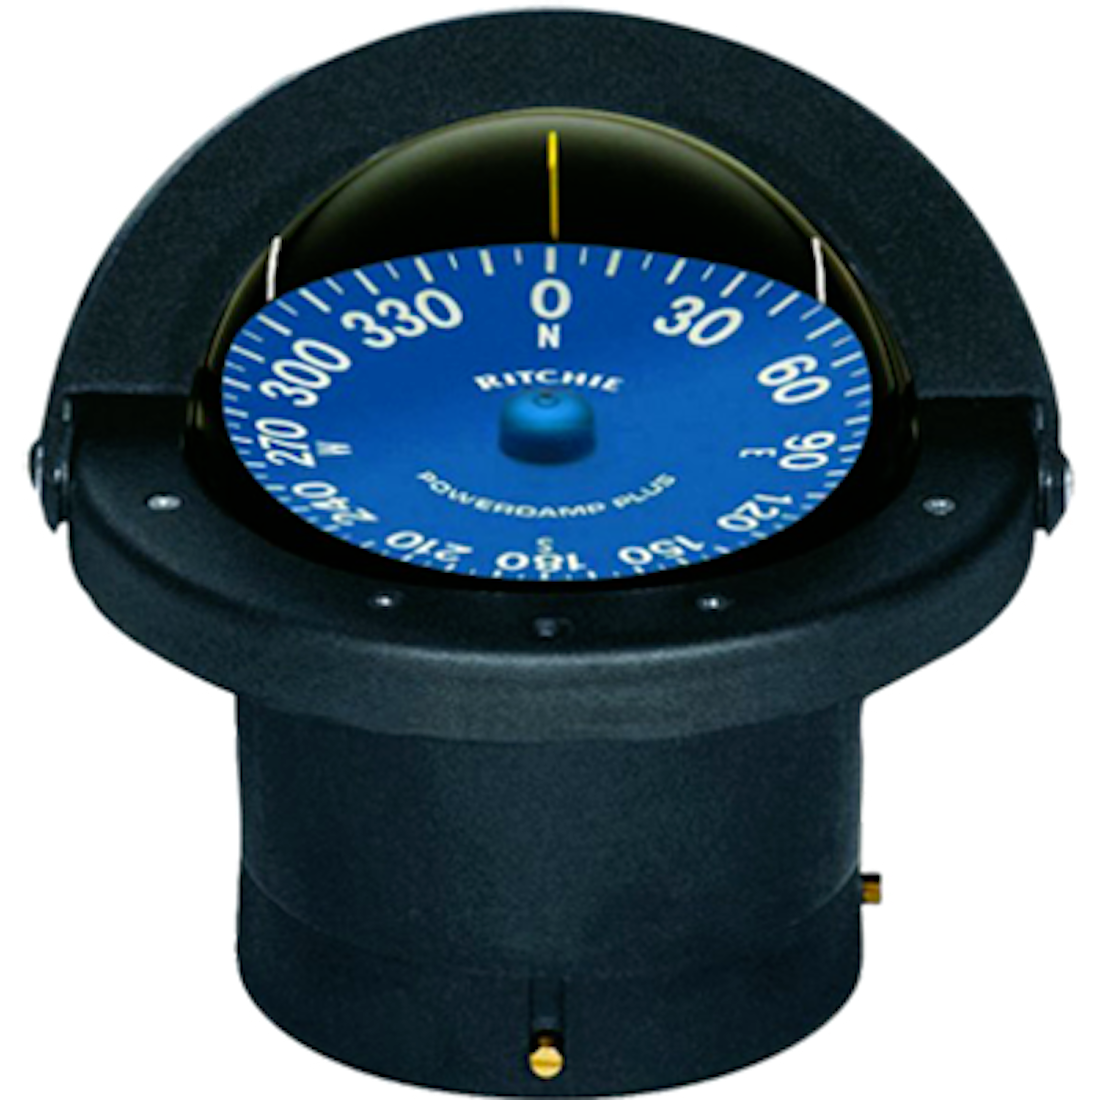 Ritchie SS-2000 SuperSport Compass - Flush Mount - Black [SS-2000]